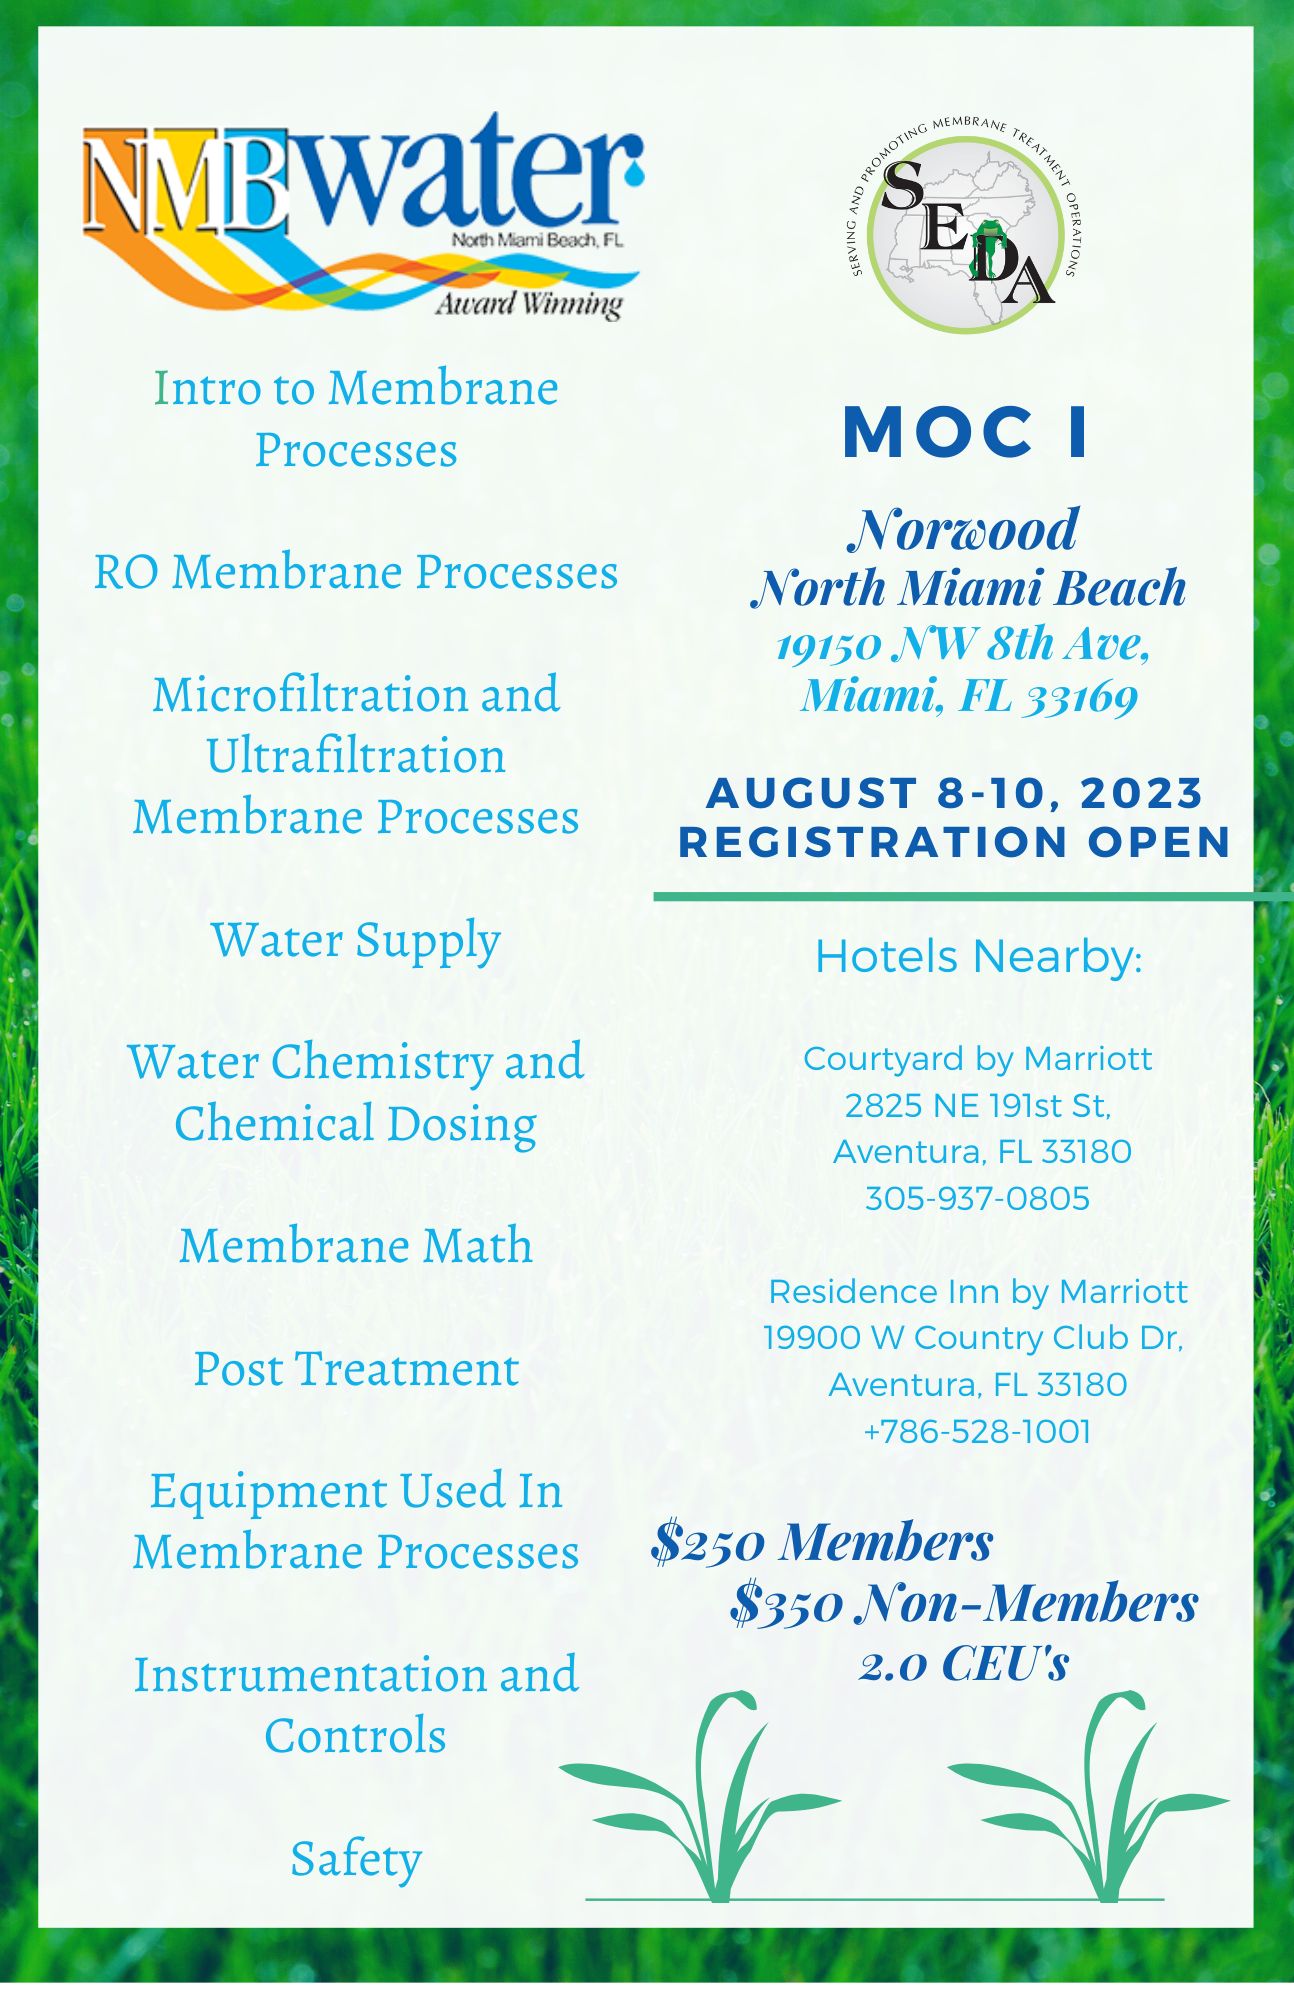 MOC I North Miami Beach Aug 8-10